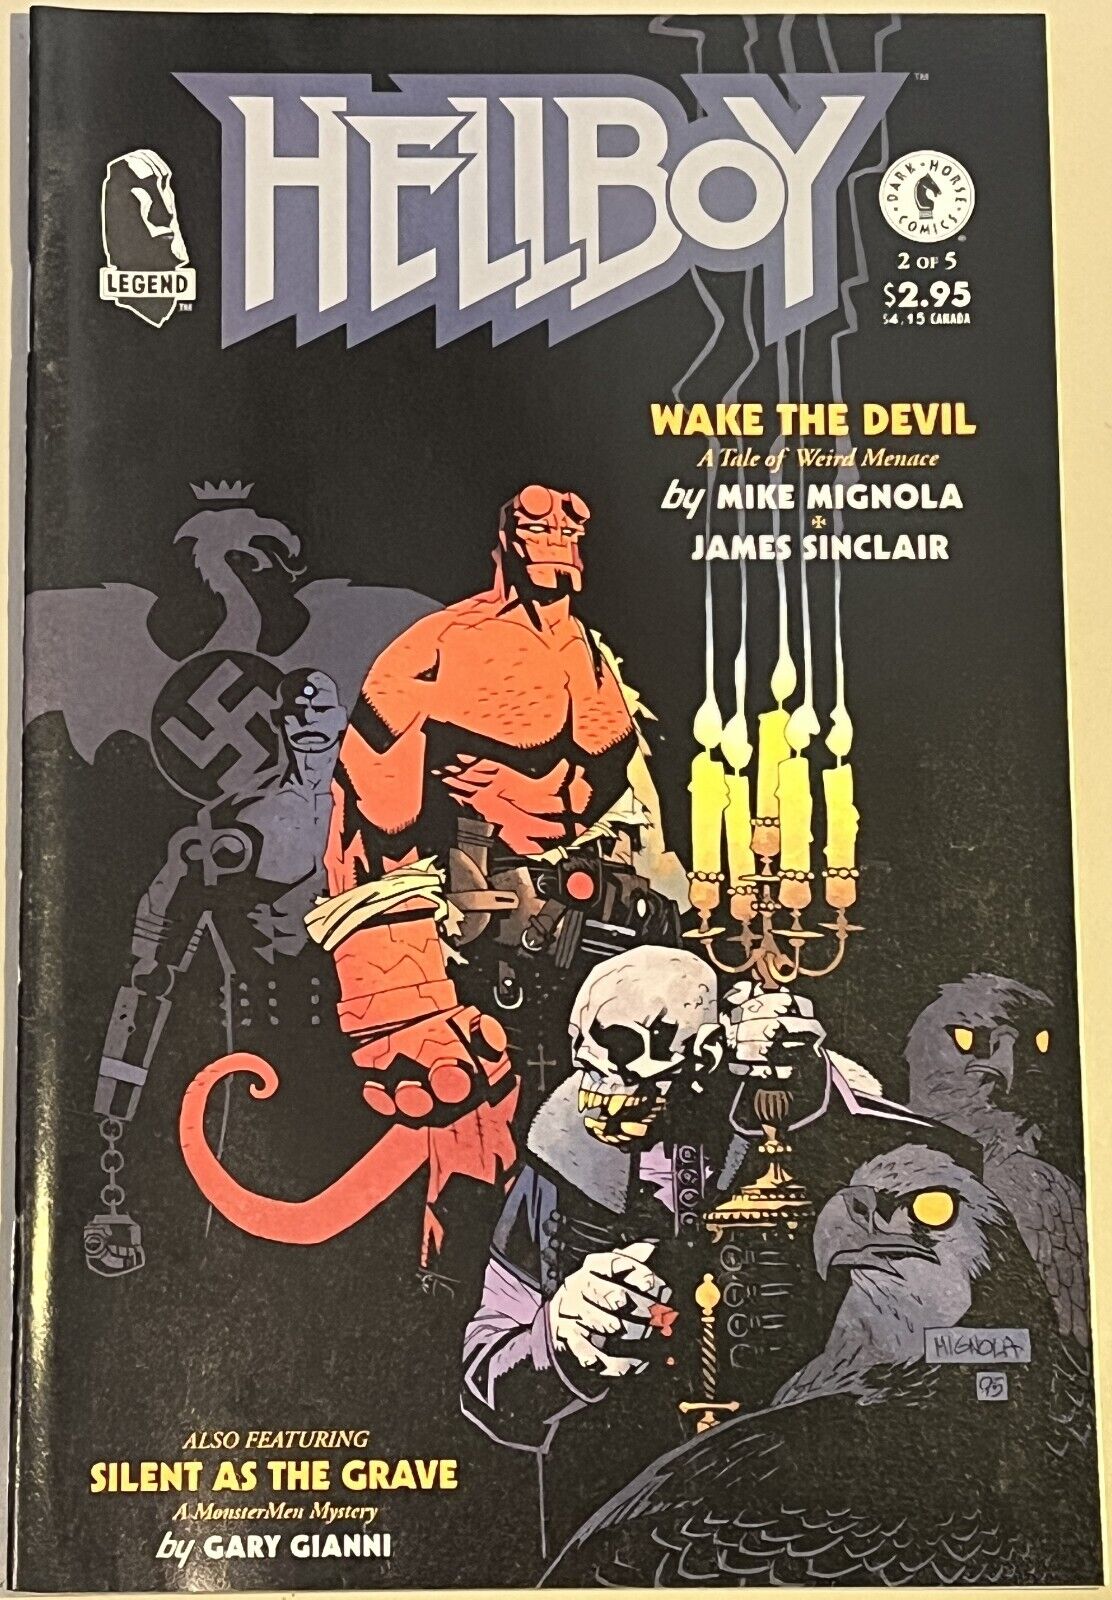 HELLBOY Wake the Devil #2/5 Dark Horse Comics 1996 Mignola Sinclair - High Grade